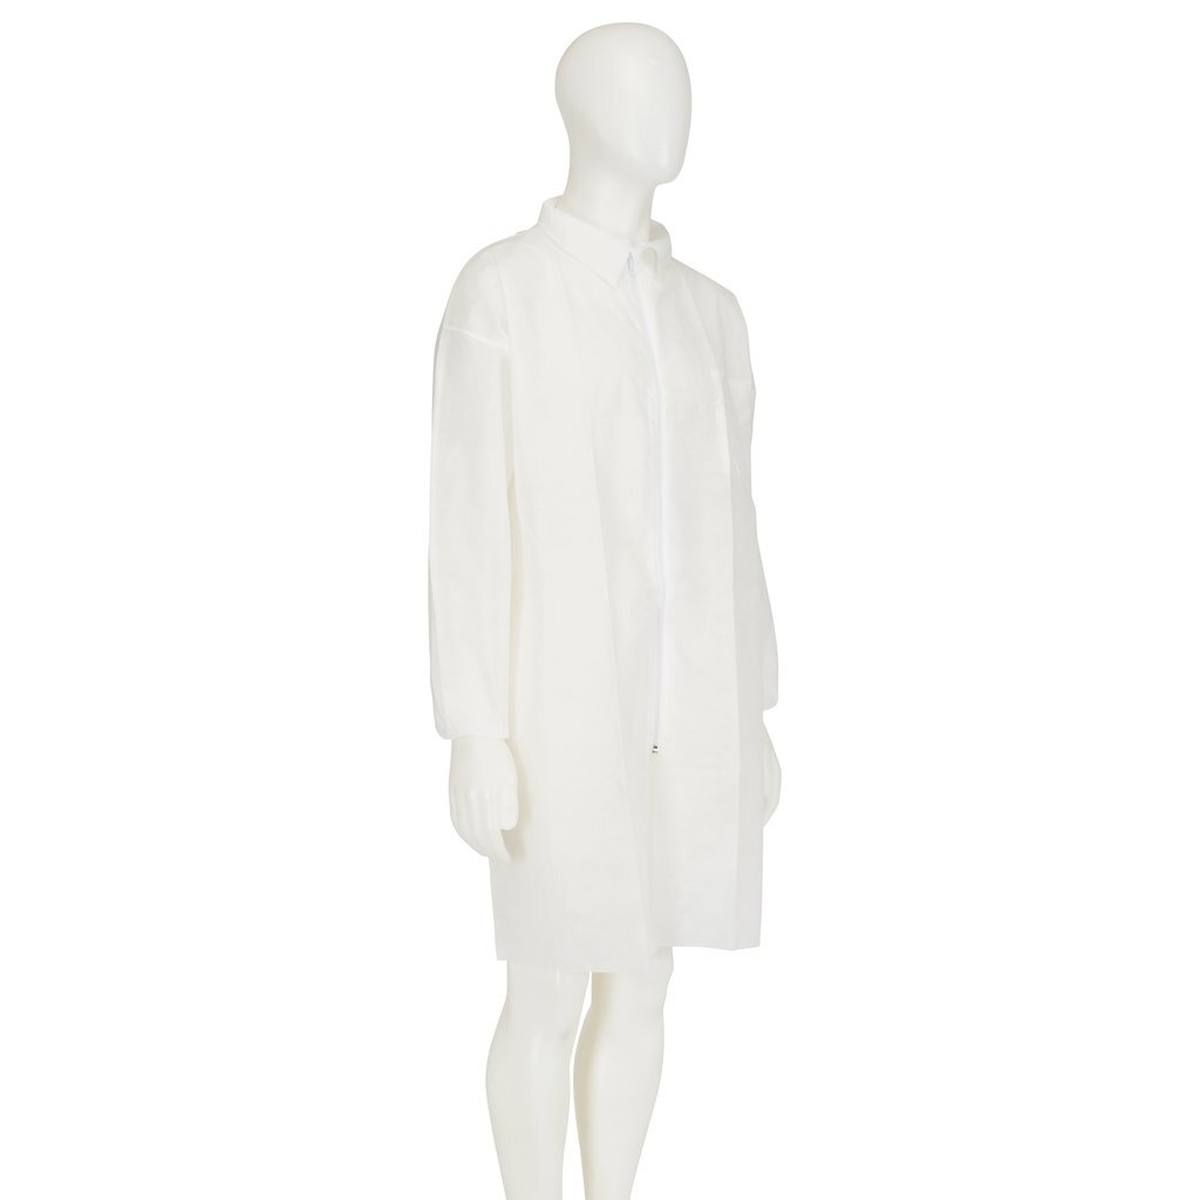 3M 4400 Abrigo, blanco, talla XL, material 100% polipropileno, transpirable, muy ligero, con cremallera